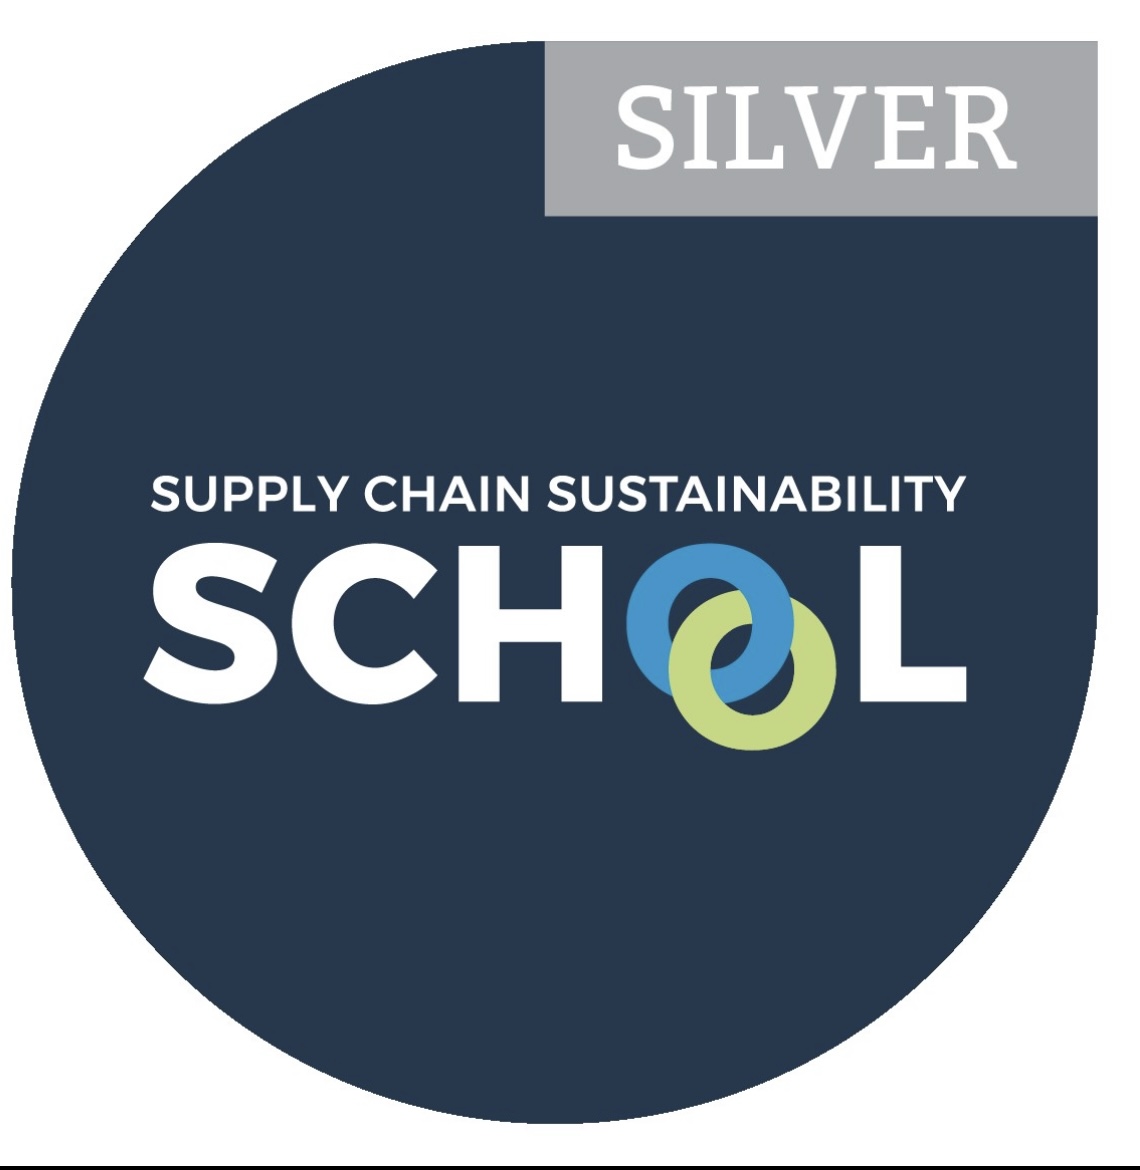 Supply Chain School Sustainability Silver Award